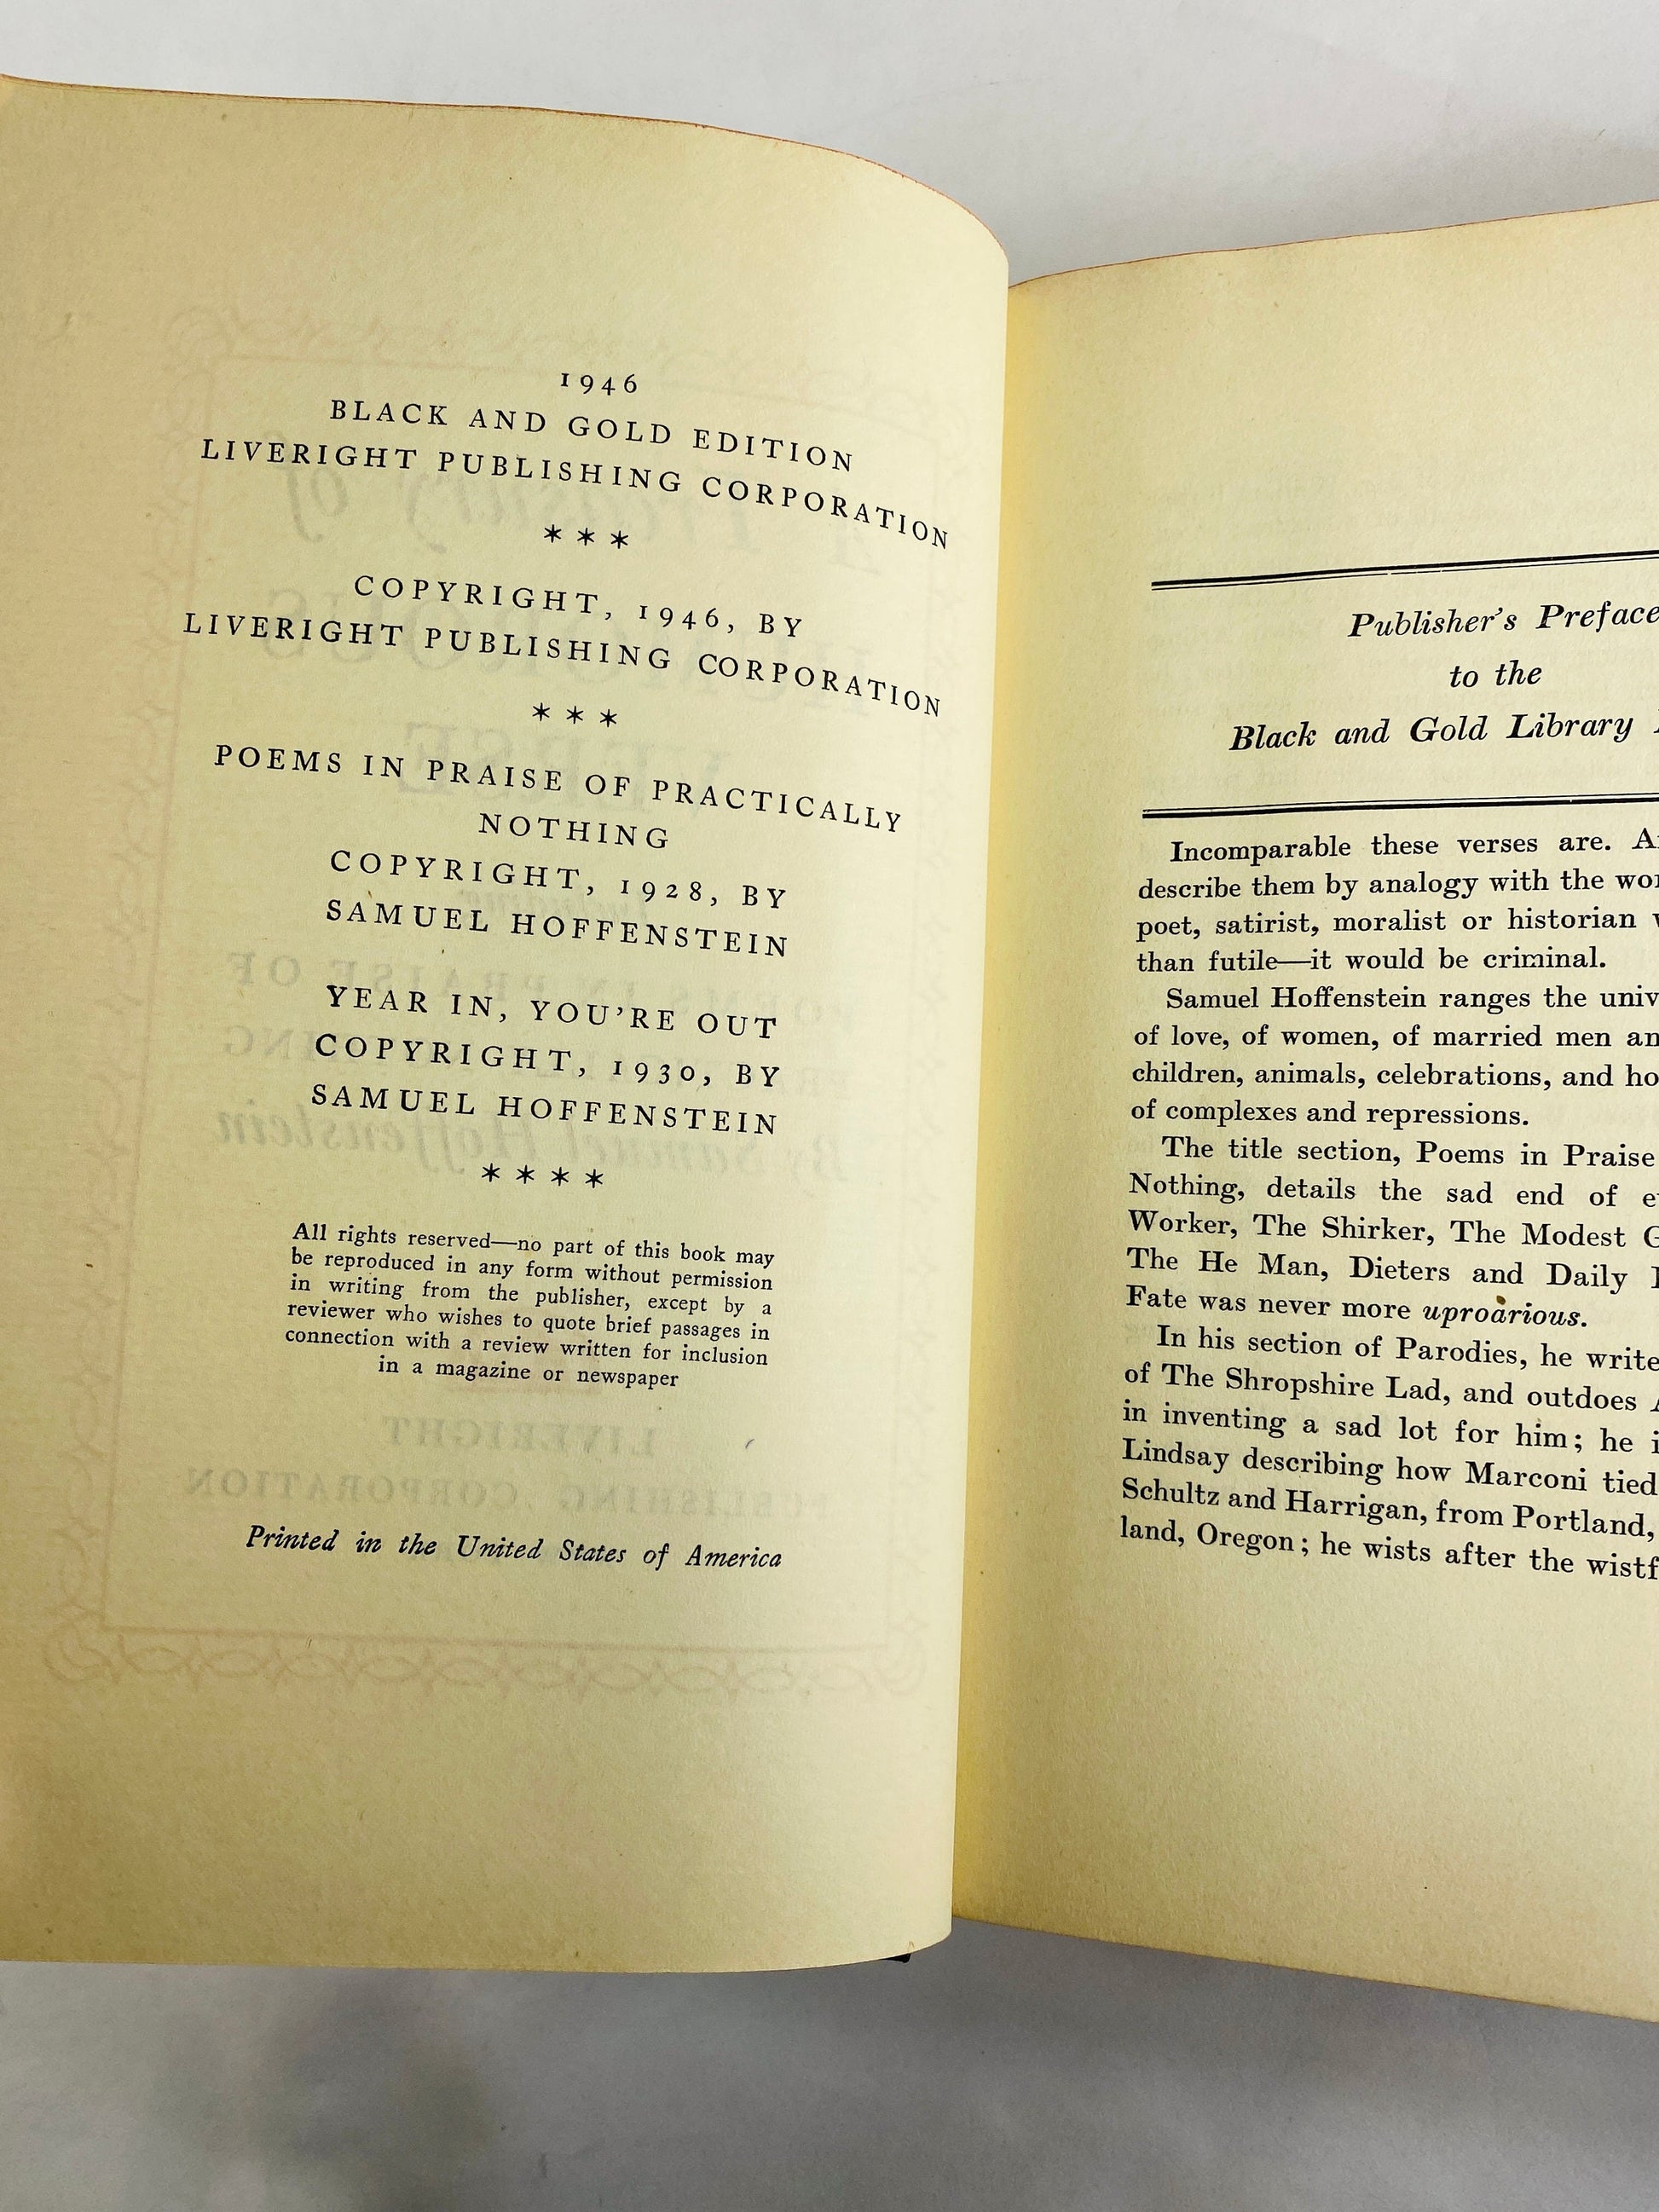 Poems in Praise of Practically Nothing vintage book Treasury of Humorous Verse by Hoffenstein BEAUTIFUL Black and Gold binding